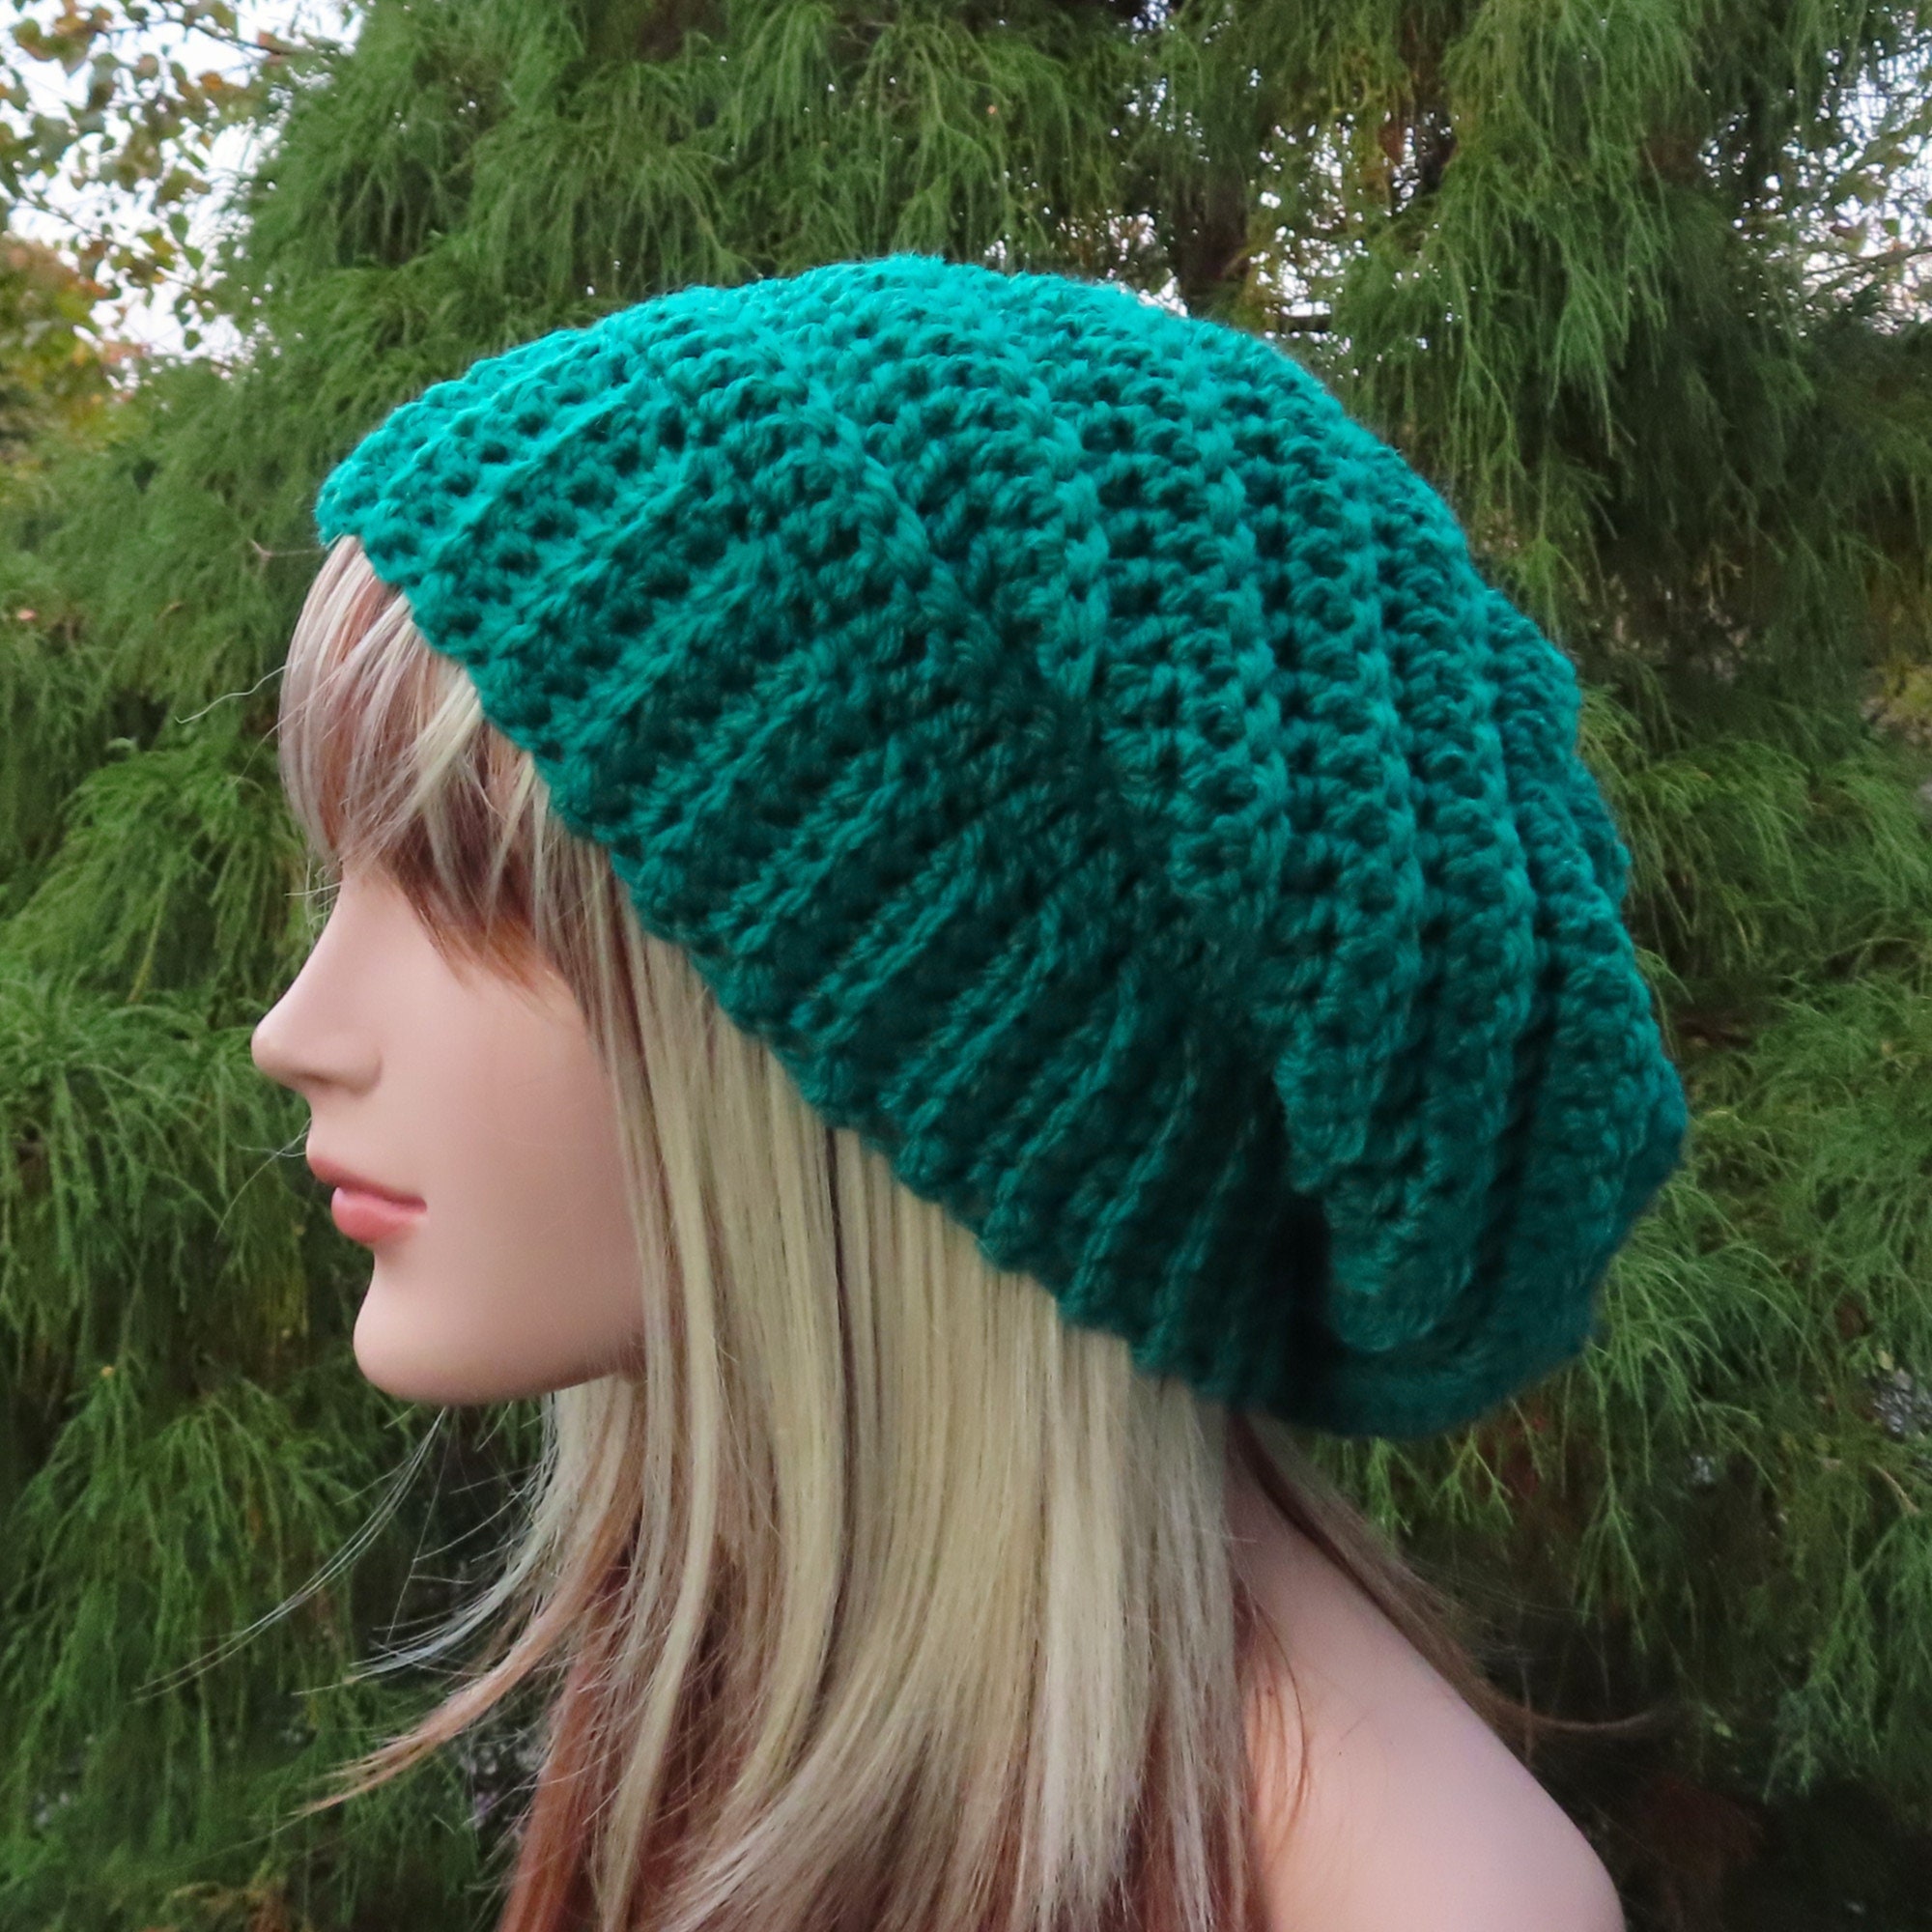 Hand crochet slouchy purple green beanie hat,green hat for women,handmade beanie hat,winter chunky knit hat,chunky knit beanie,slouchy hat